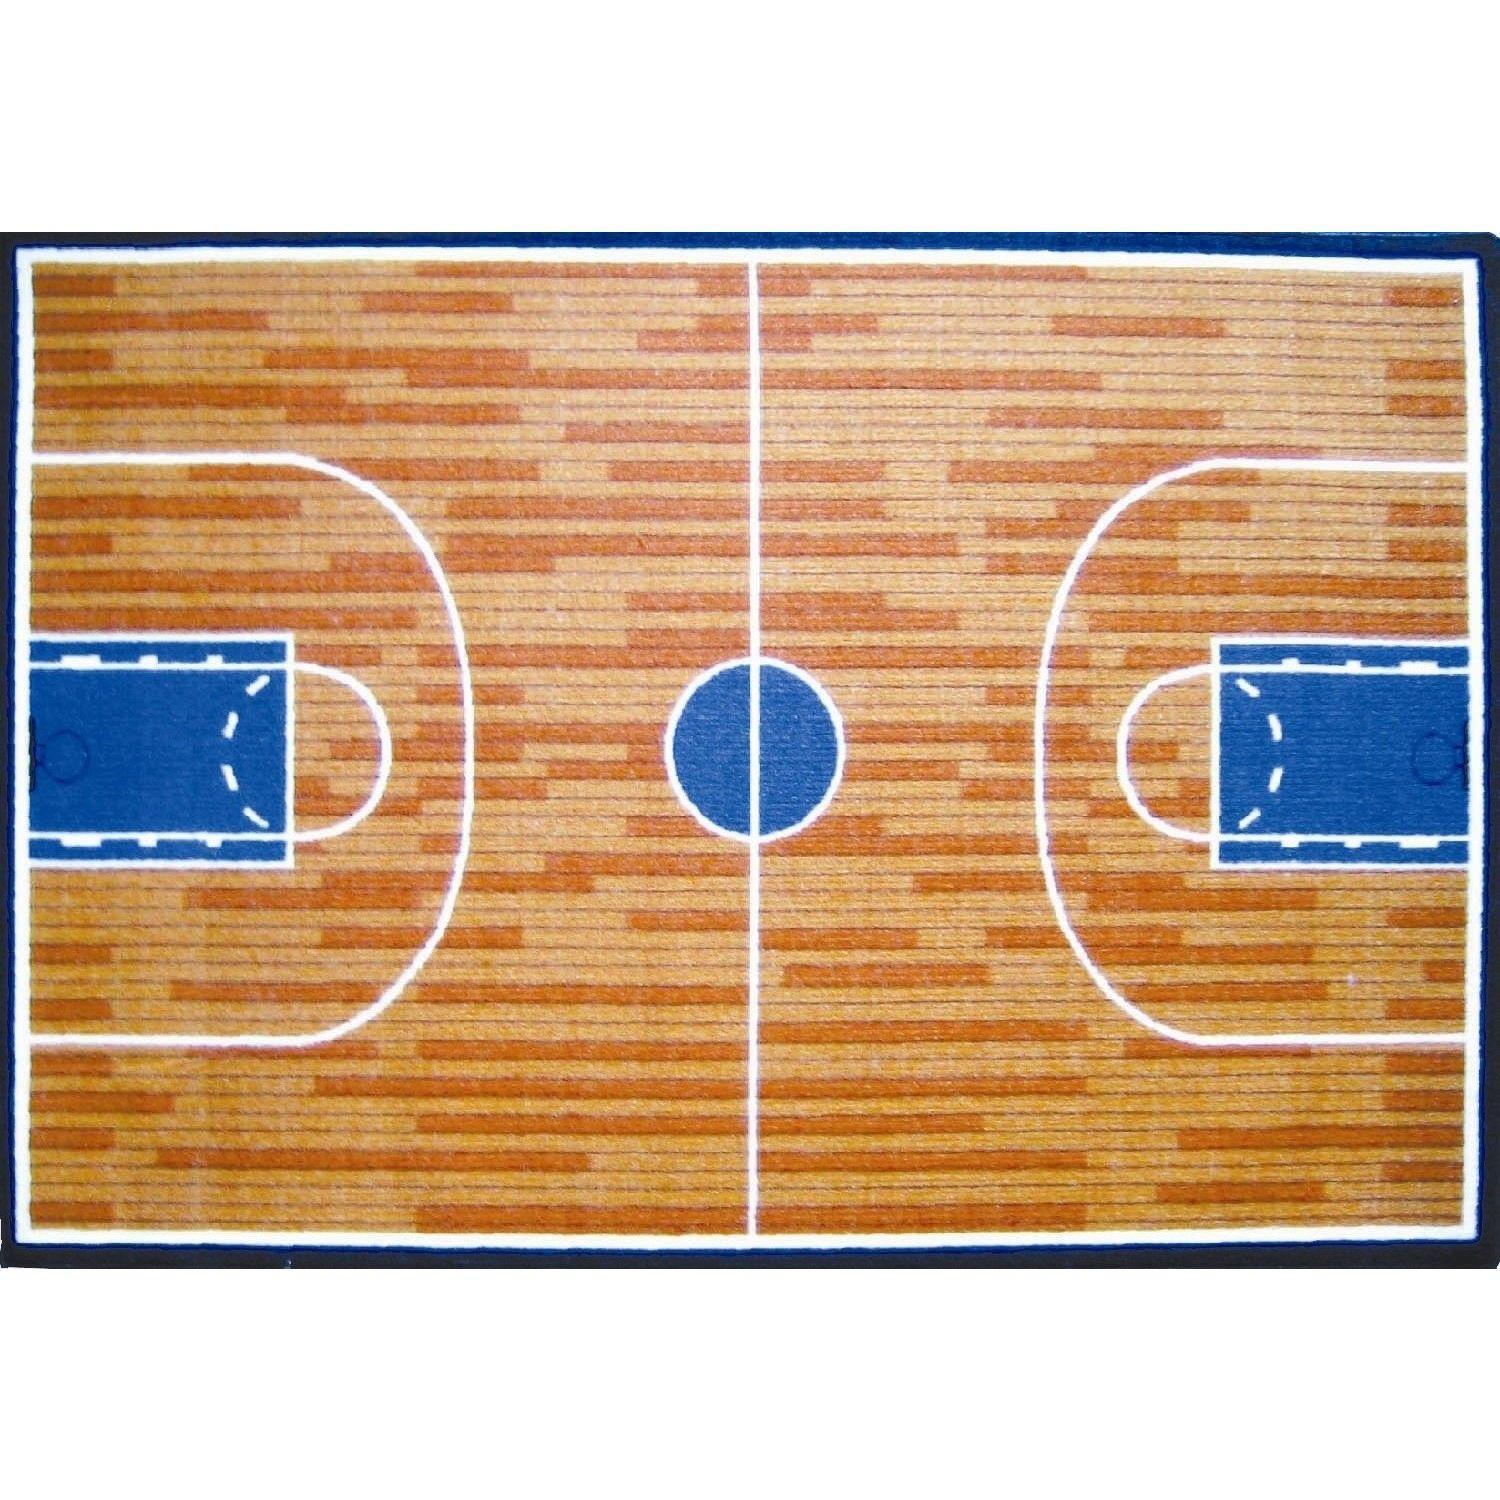 image For > Basketball Court Image